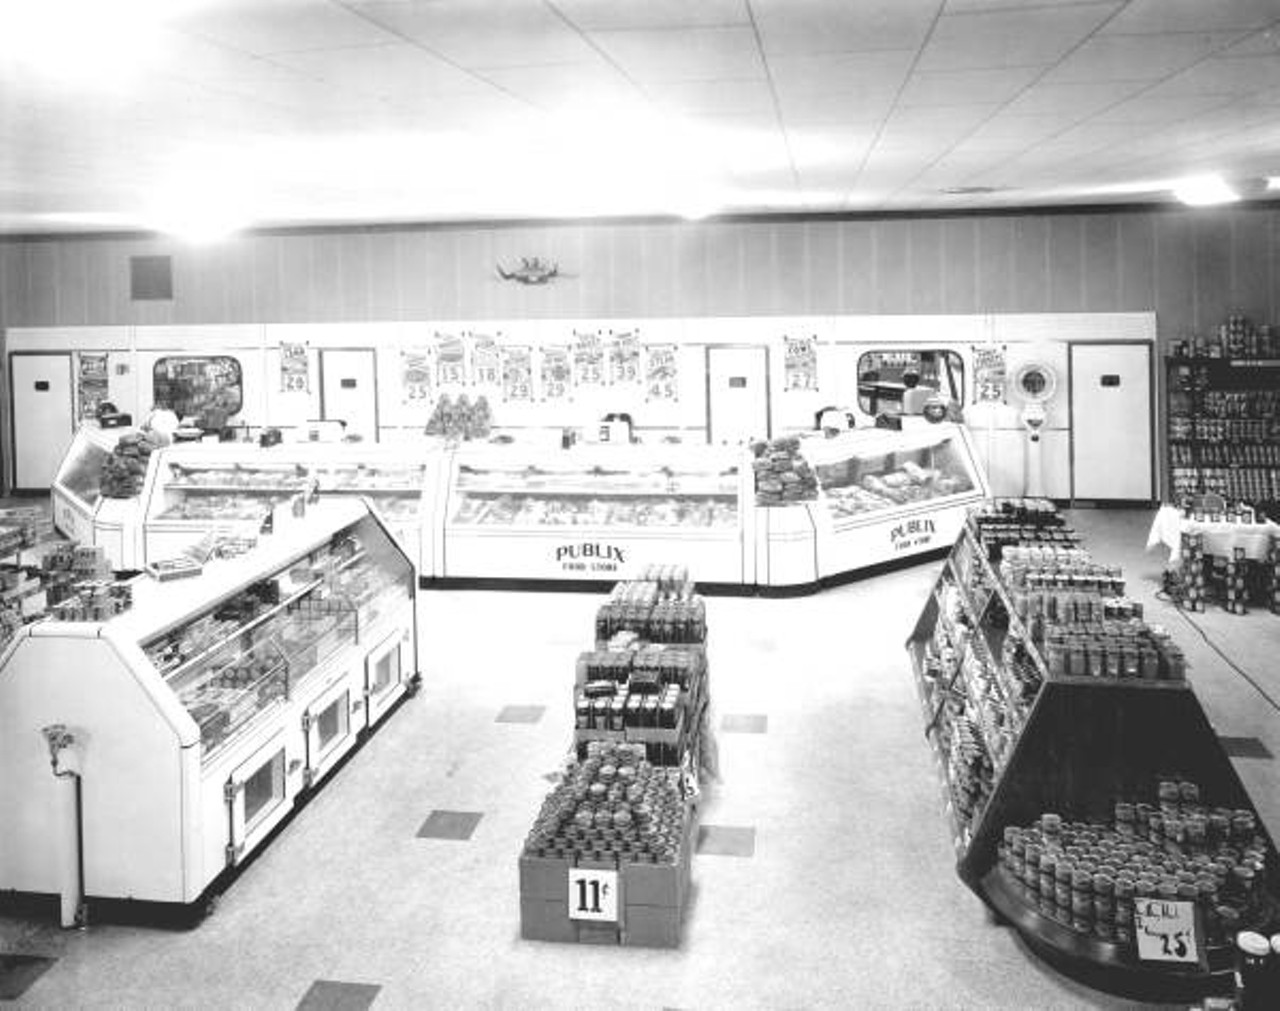 First Publix super market - Winter Haven, Florida, 1940